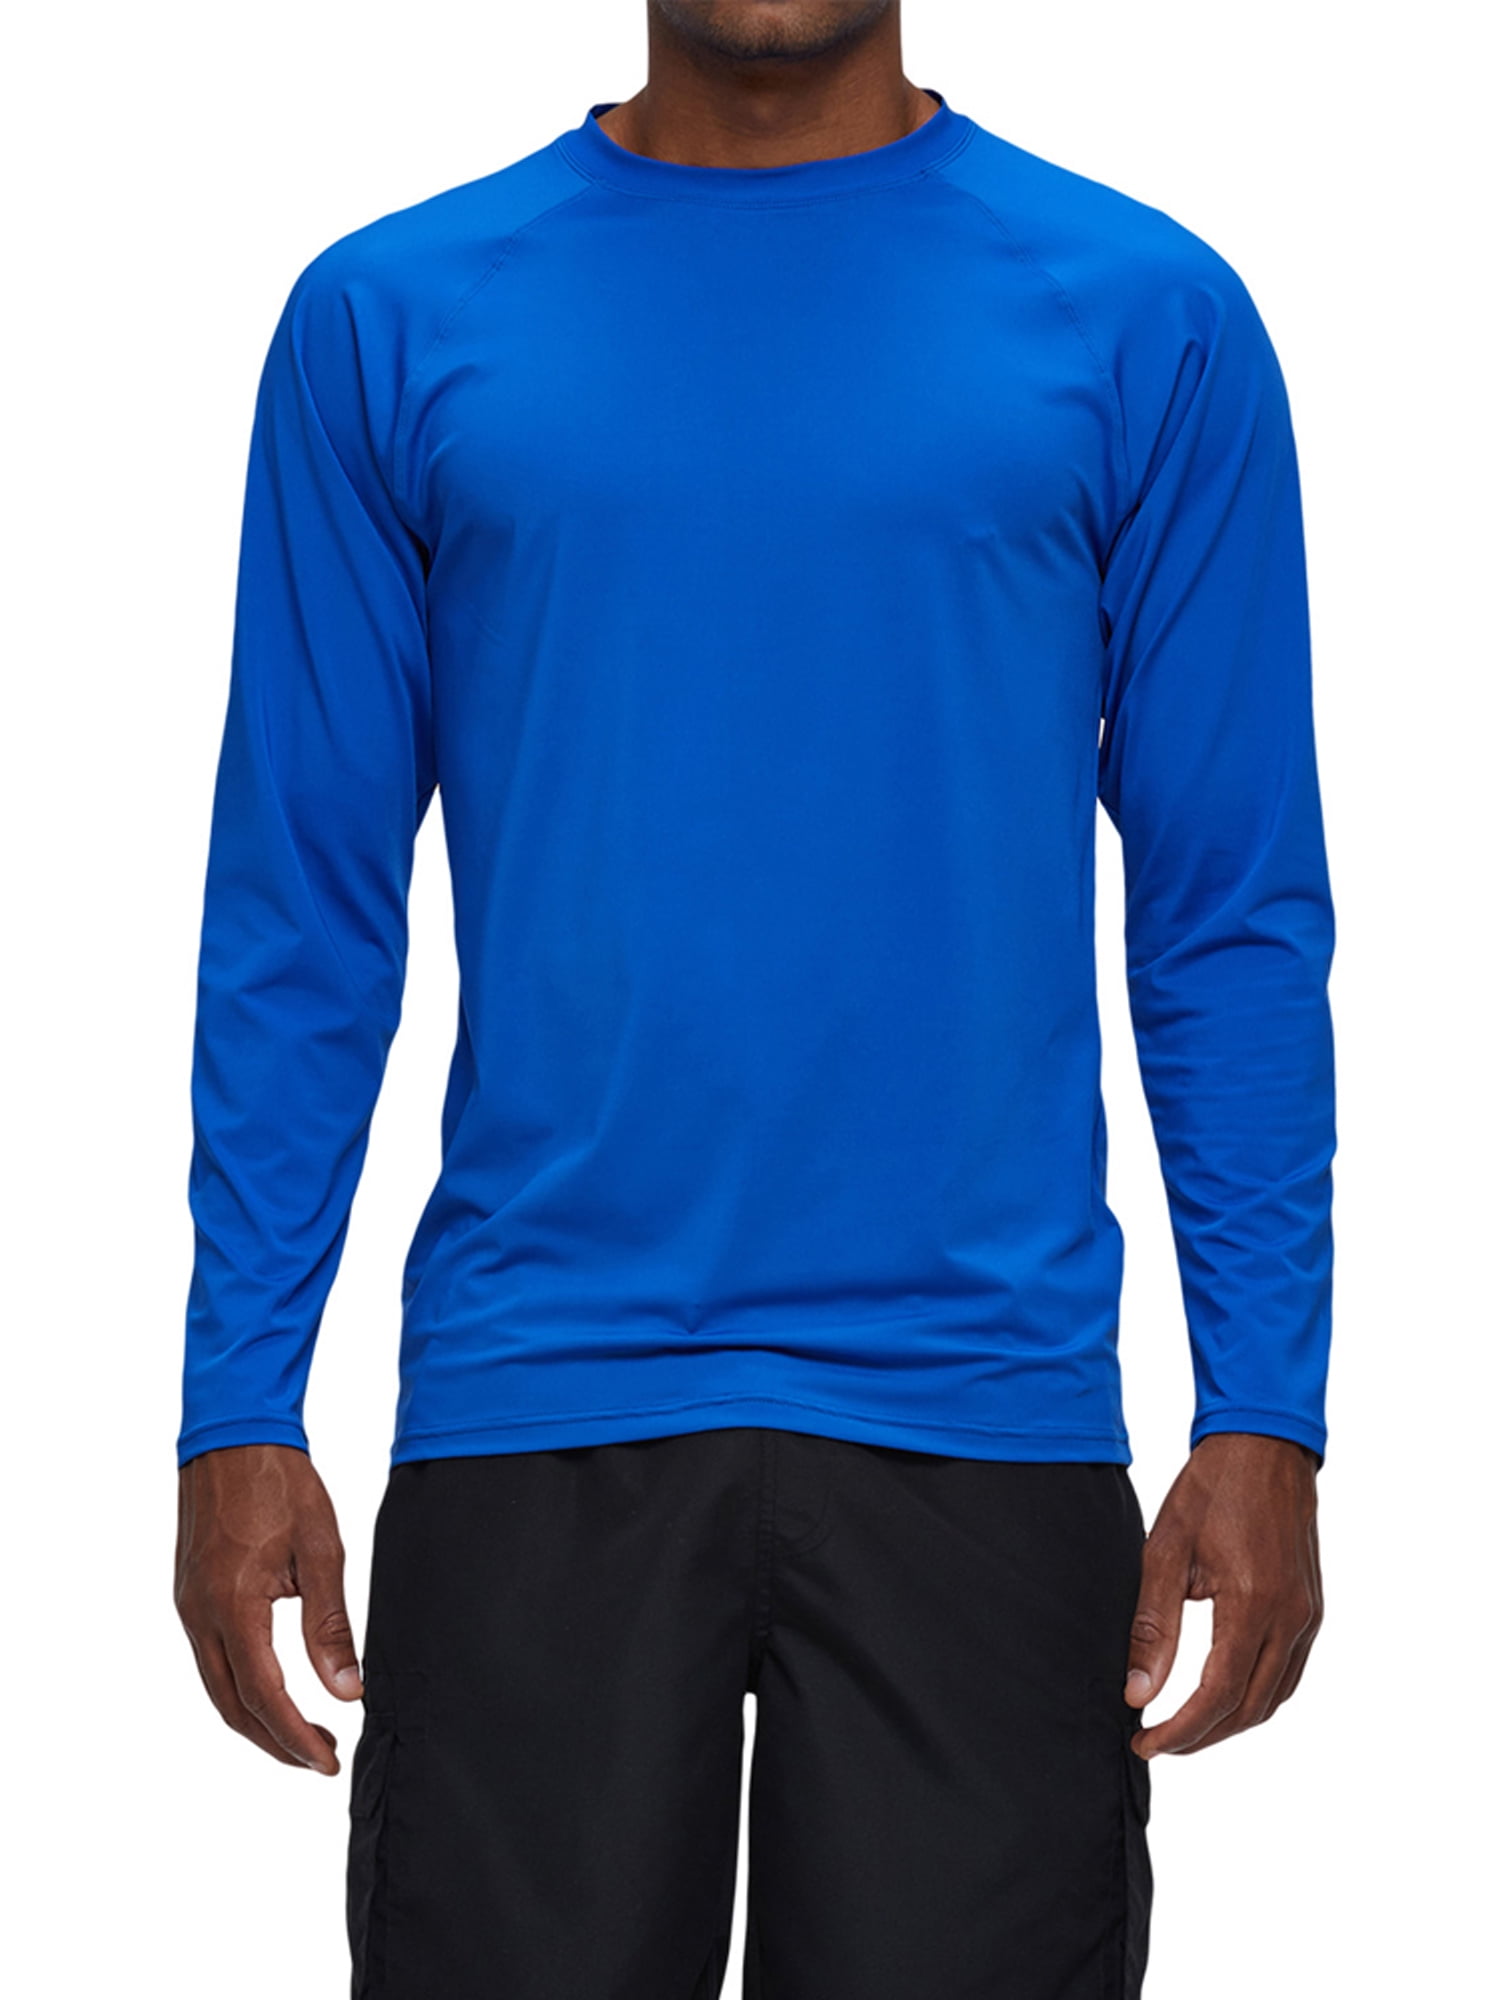 Pdbokew Long Sleeve Swim Shirts for Men Sun Protection Shirt Running Rashguard  UPF 50+ UV Swimwear Athletic Workout Blue Size 2XL 